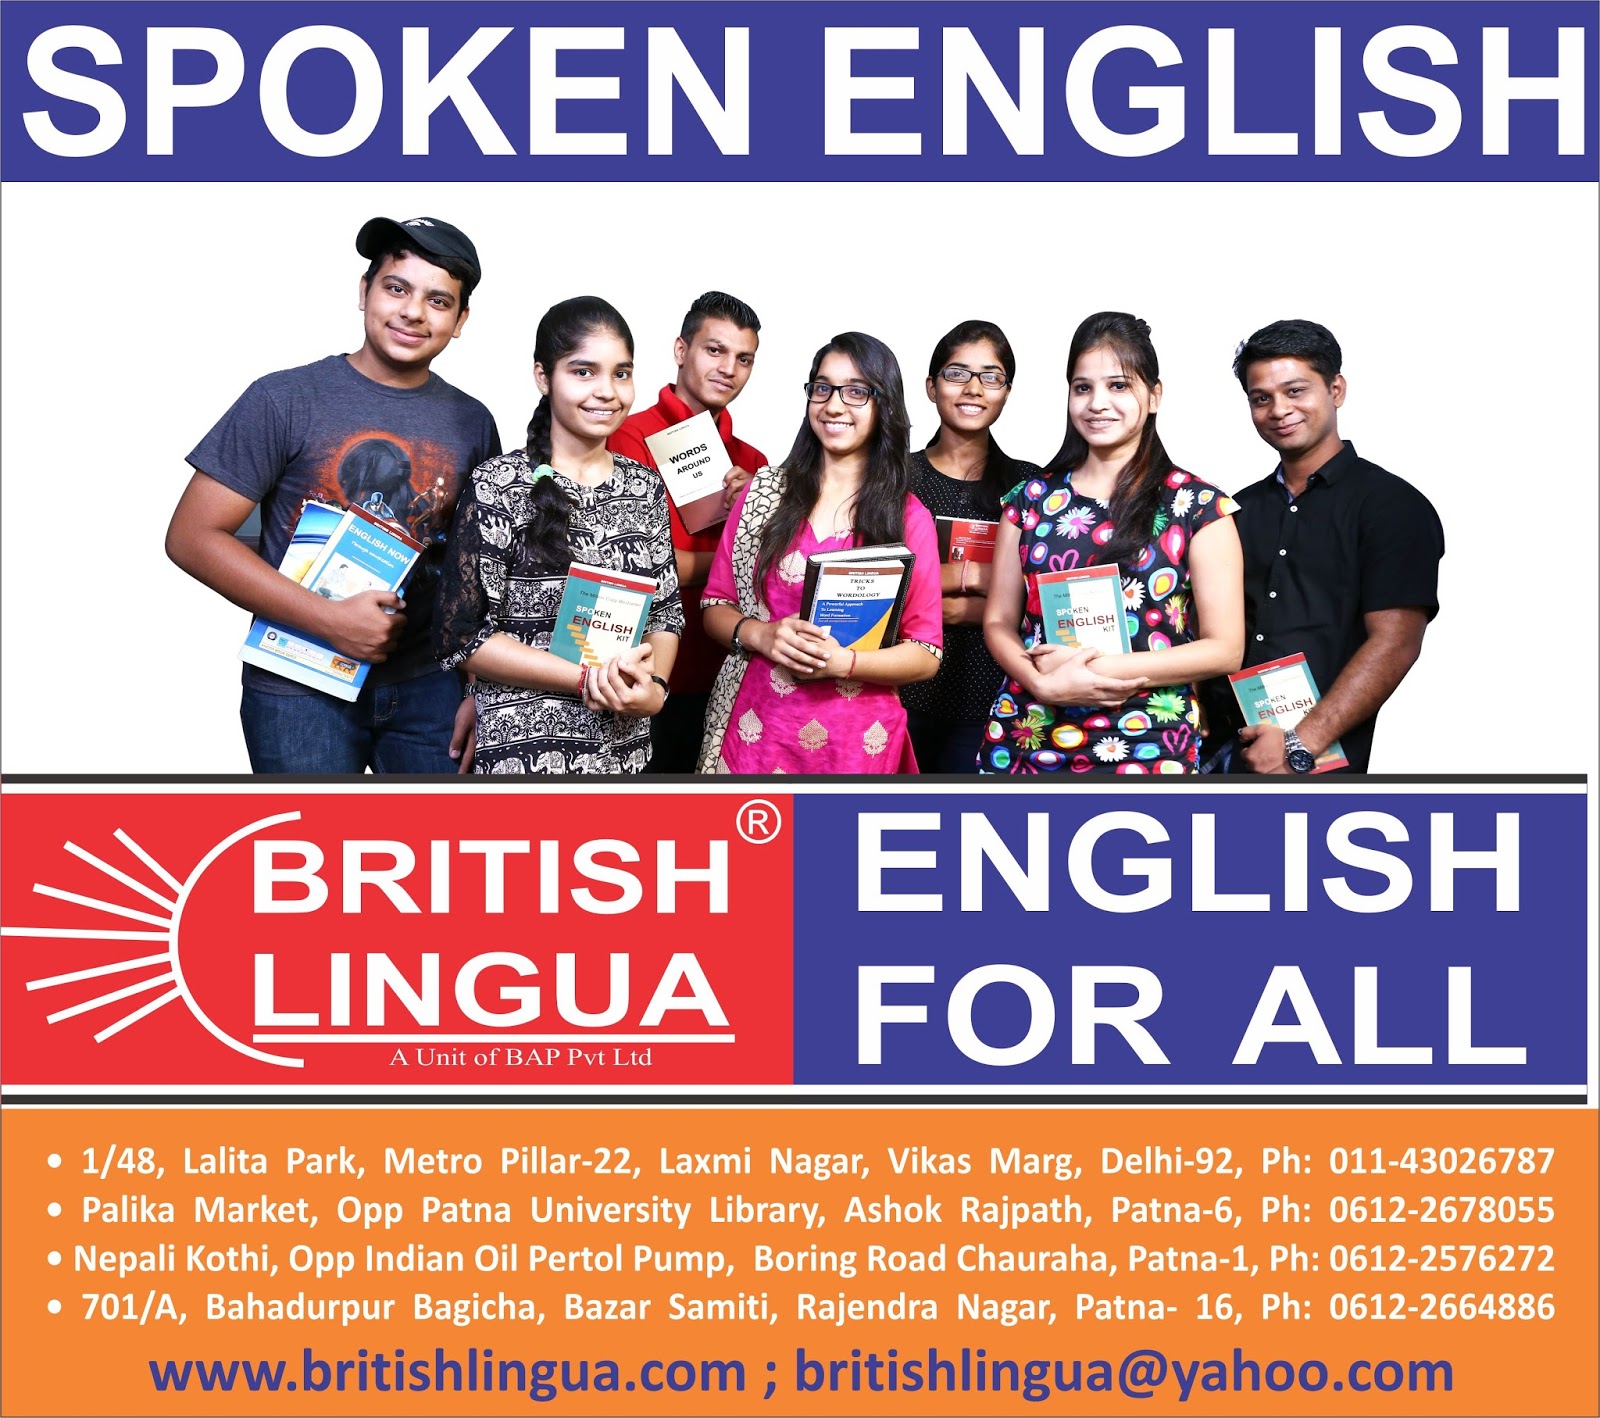 Spoken English. Spoken English Training. English speaking Zone. English spoken here